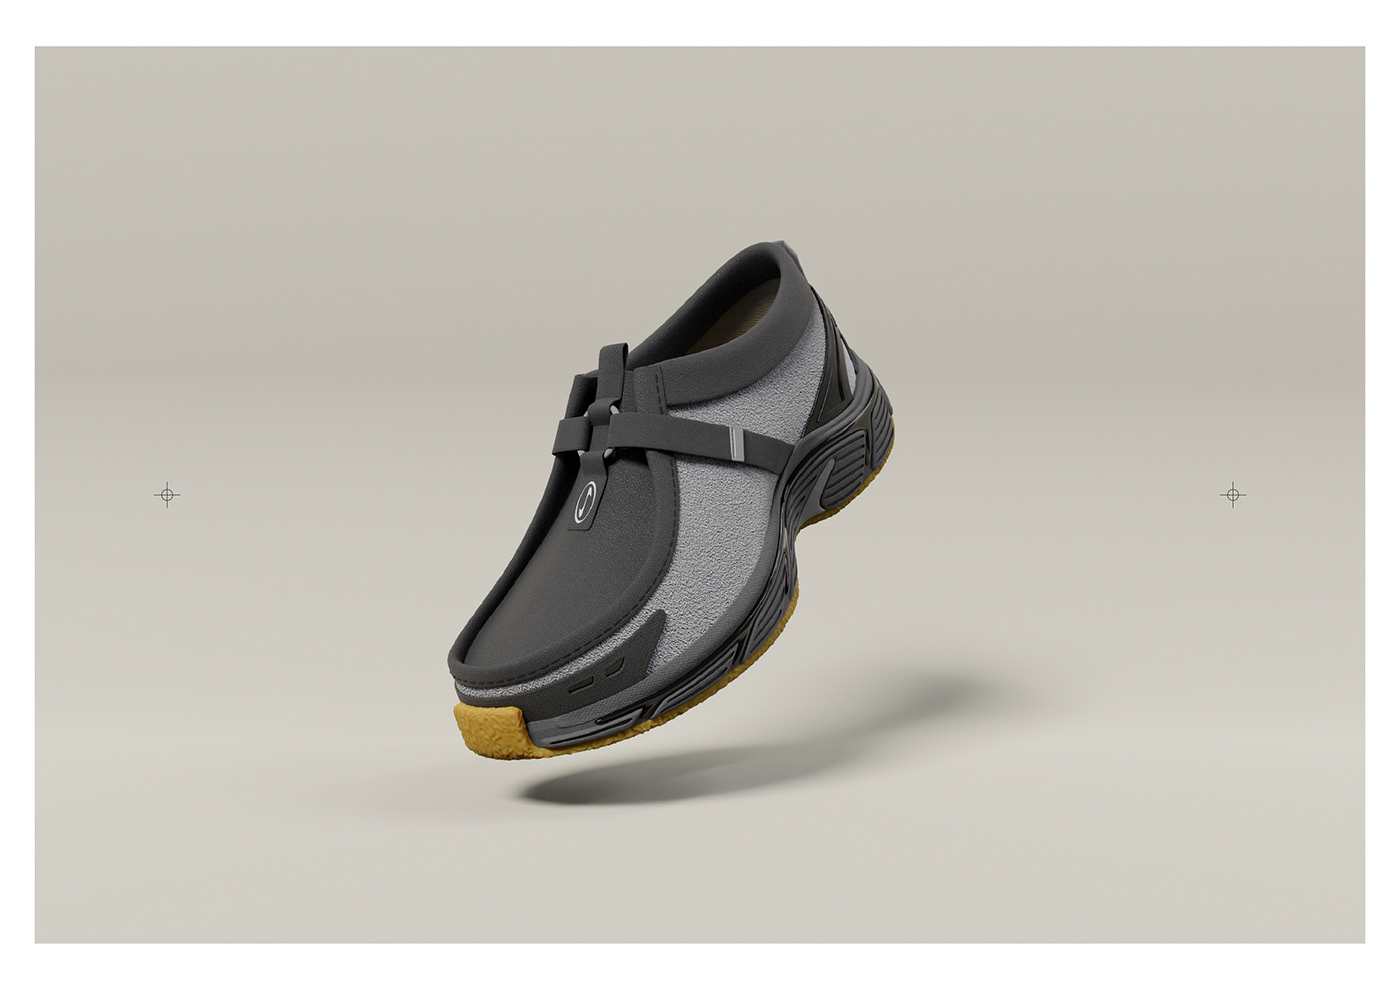 footwear design sneakers Clarks milton lennox cato blender Fashion  industrial design  STUDIO DSRPT REMIX WALLABEE REMIX